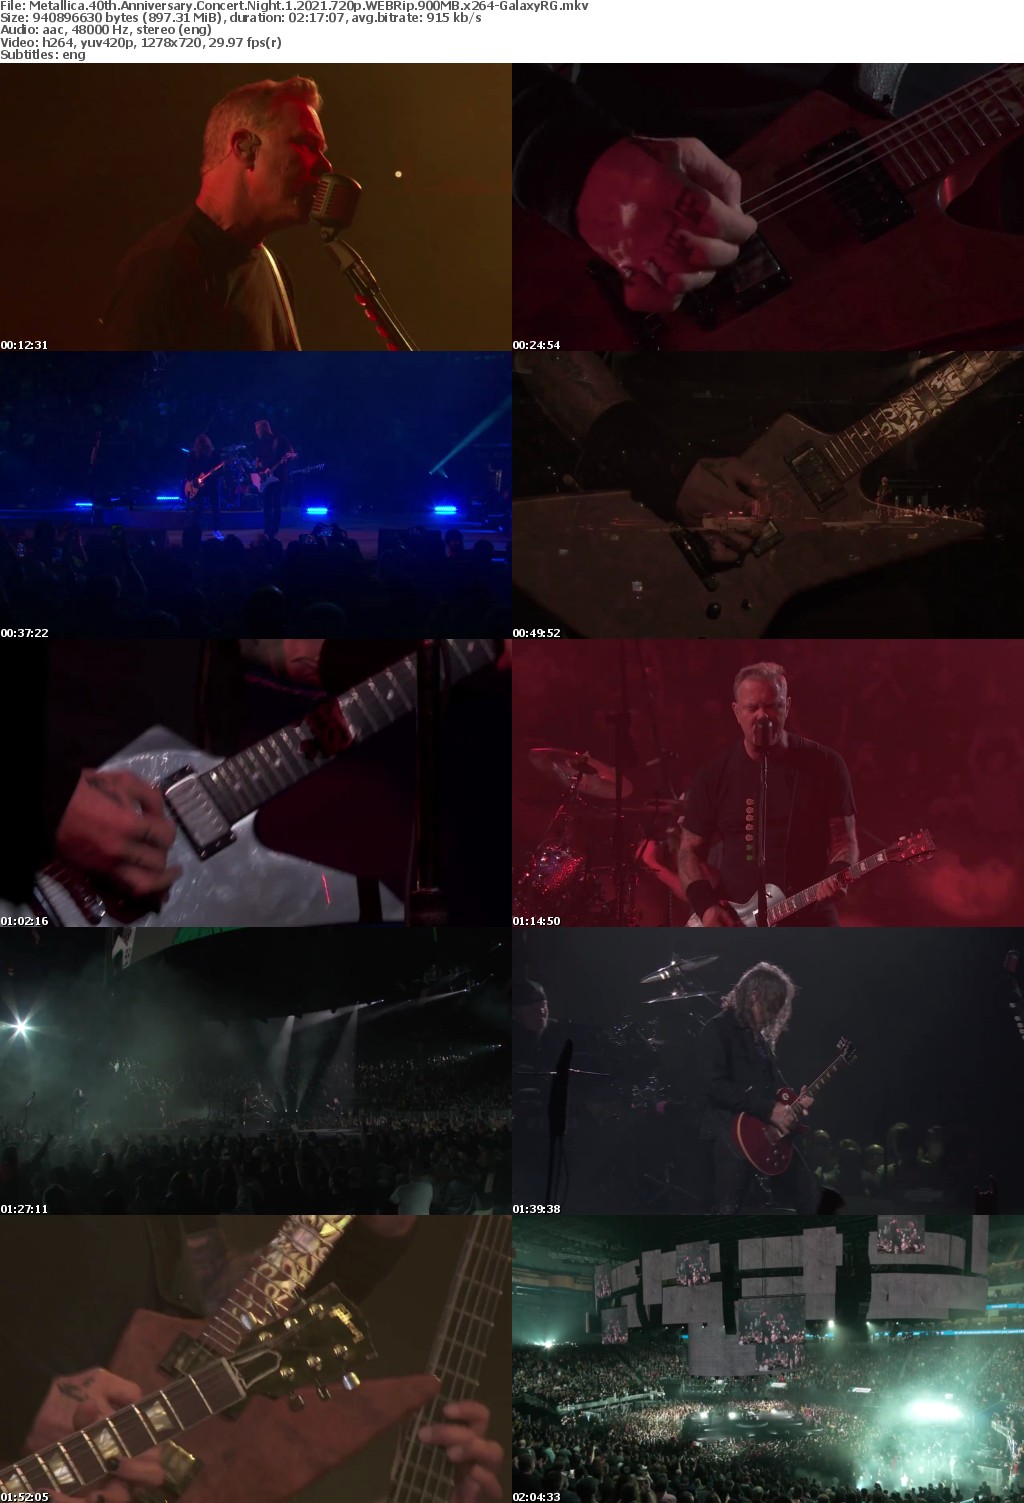 Metallica 40th Anniversary Concert Night 1 2021 720p WEBRip 900MB x264-GalaxyRG